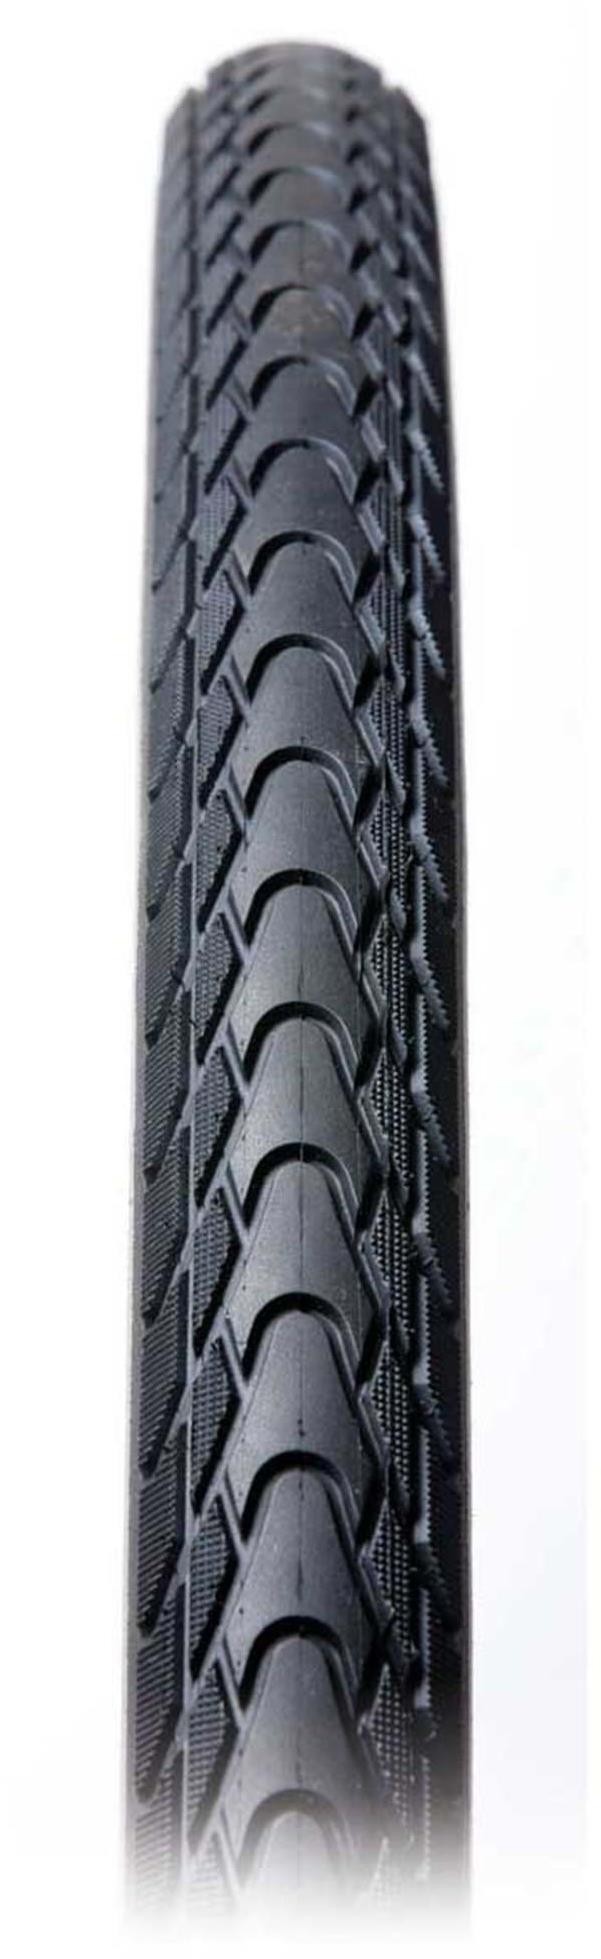 Tour Wire Bead 700c Hybrid Bike Tyre image 1